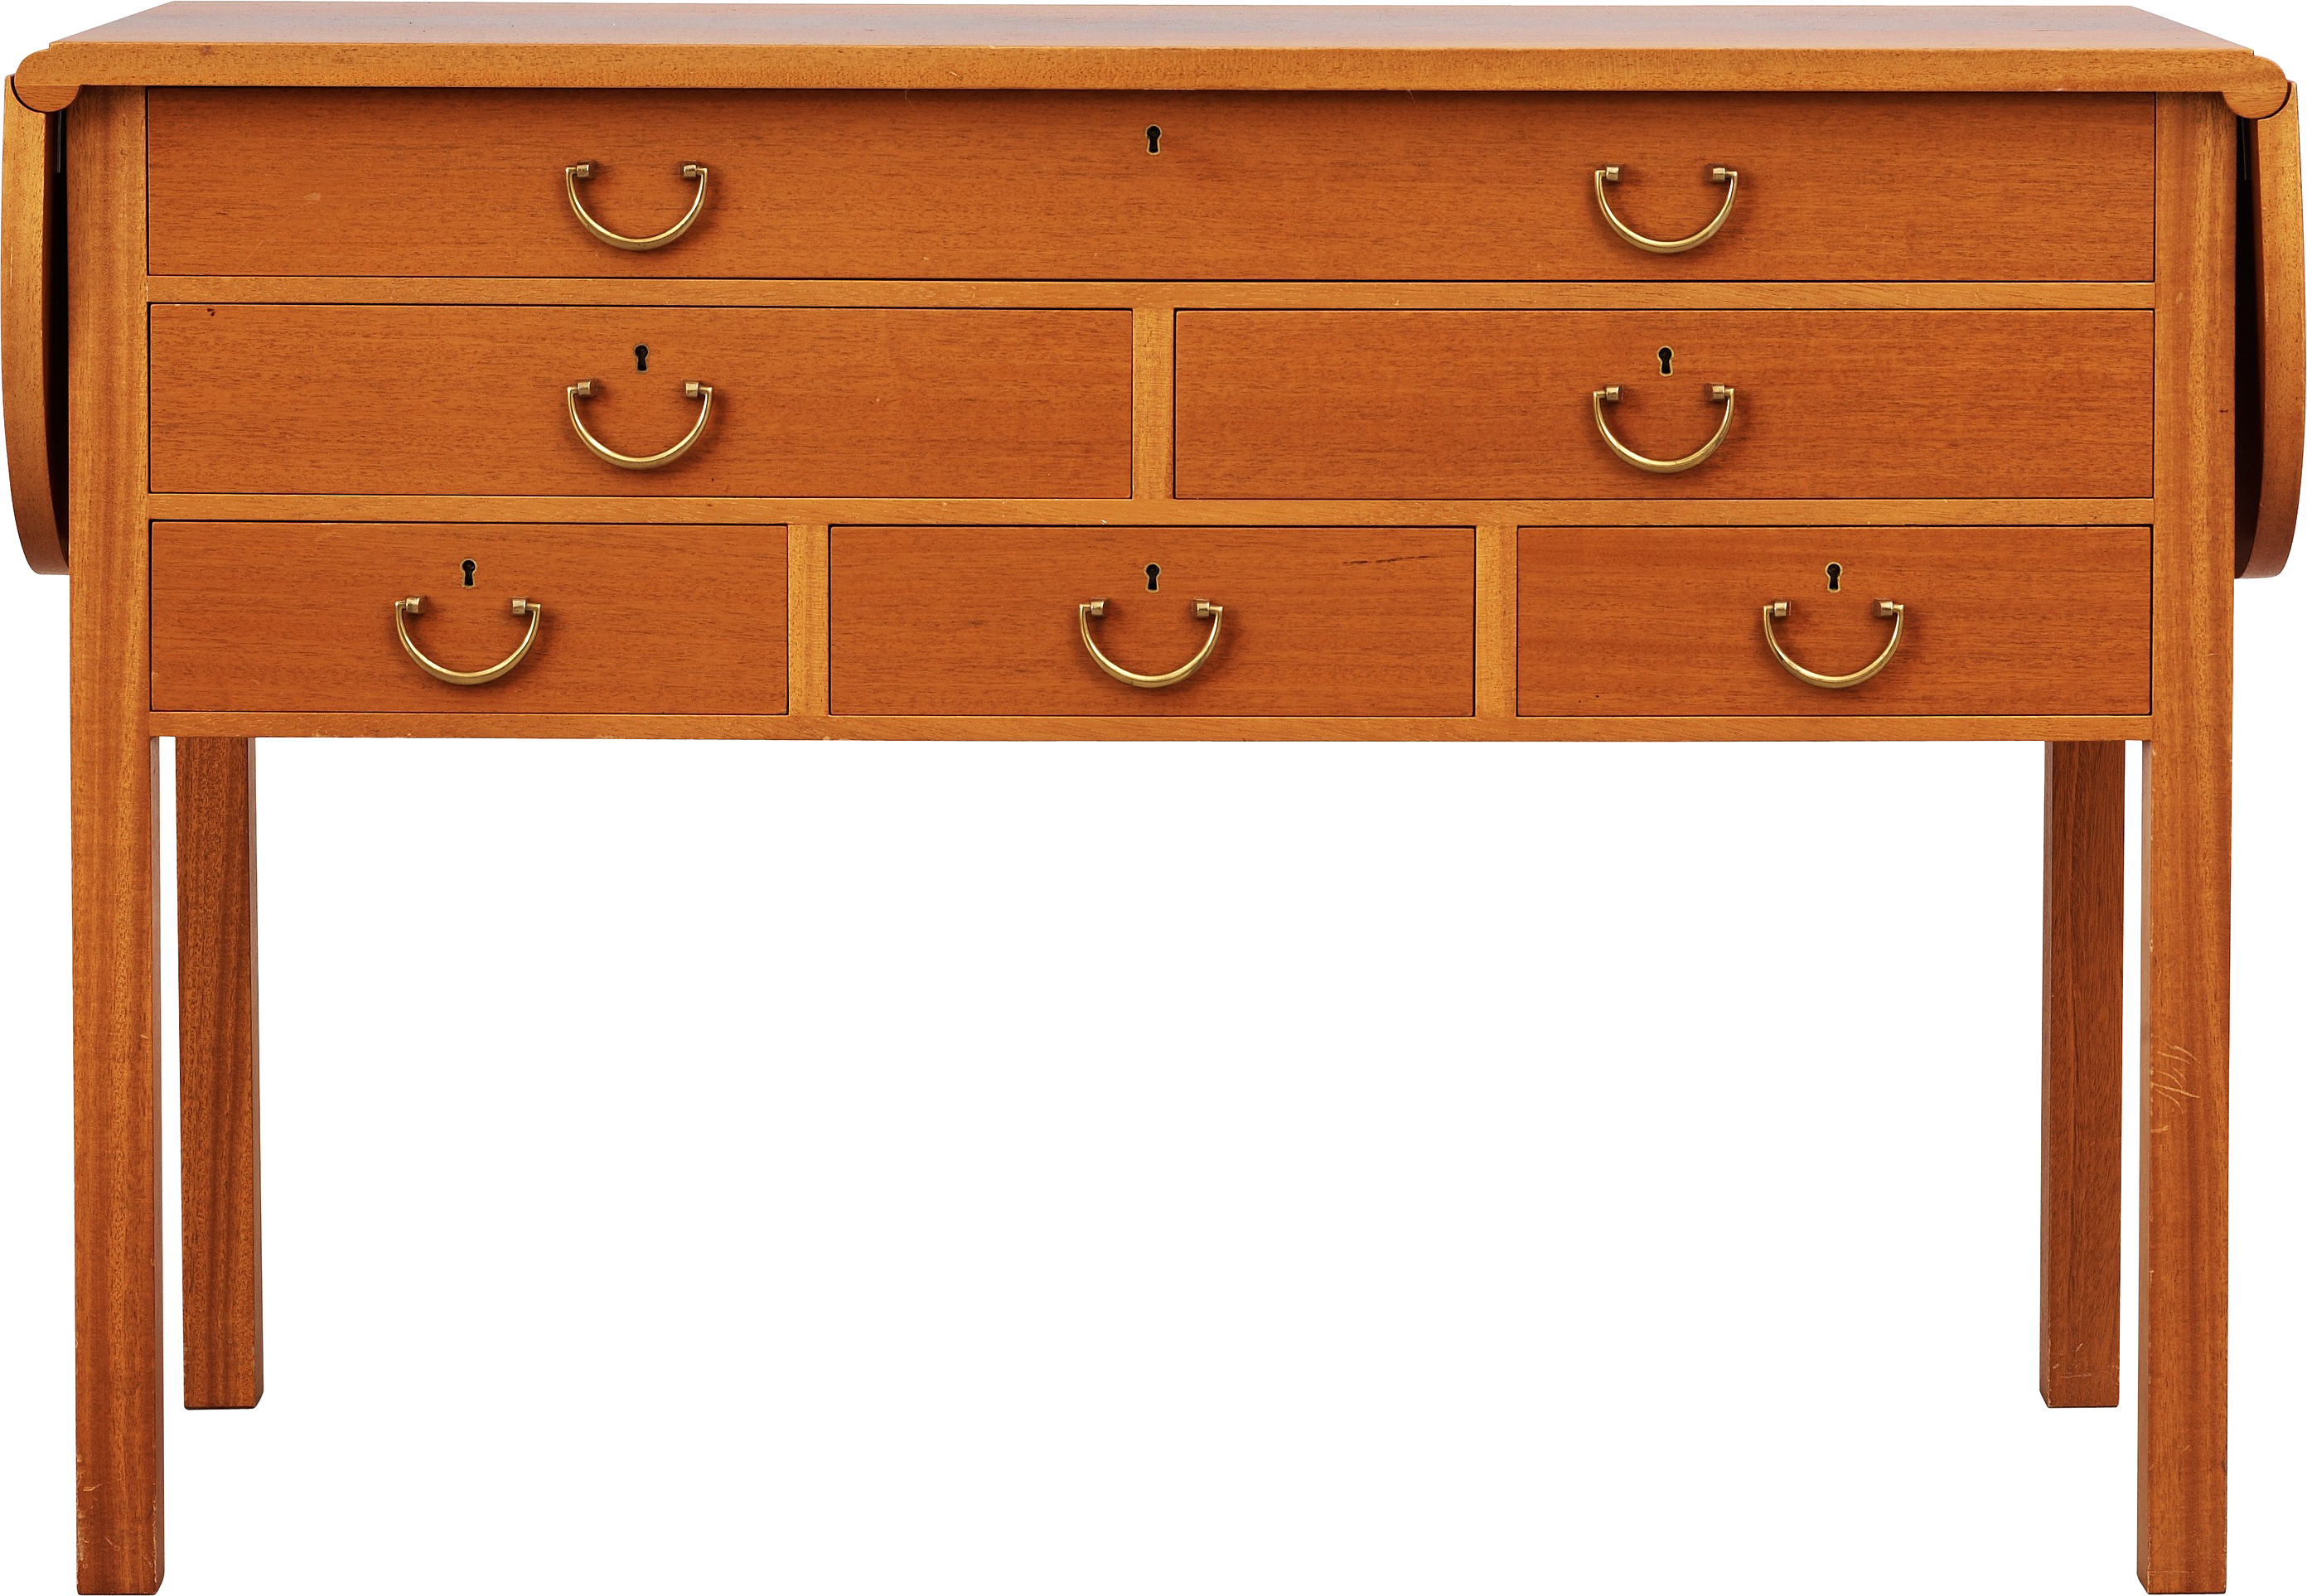 A Wooden Dresser With Gold Handles